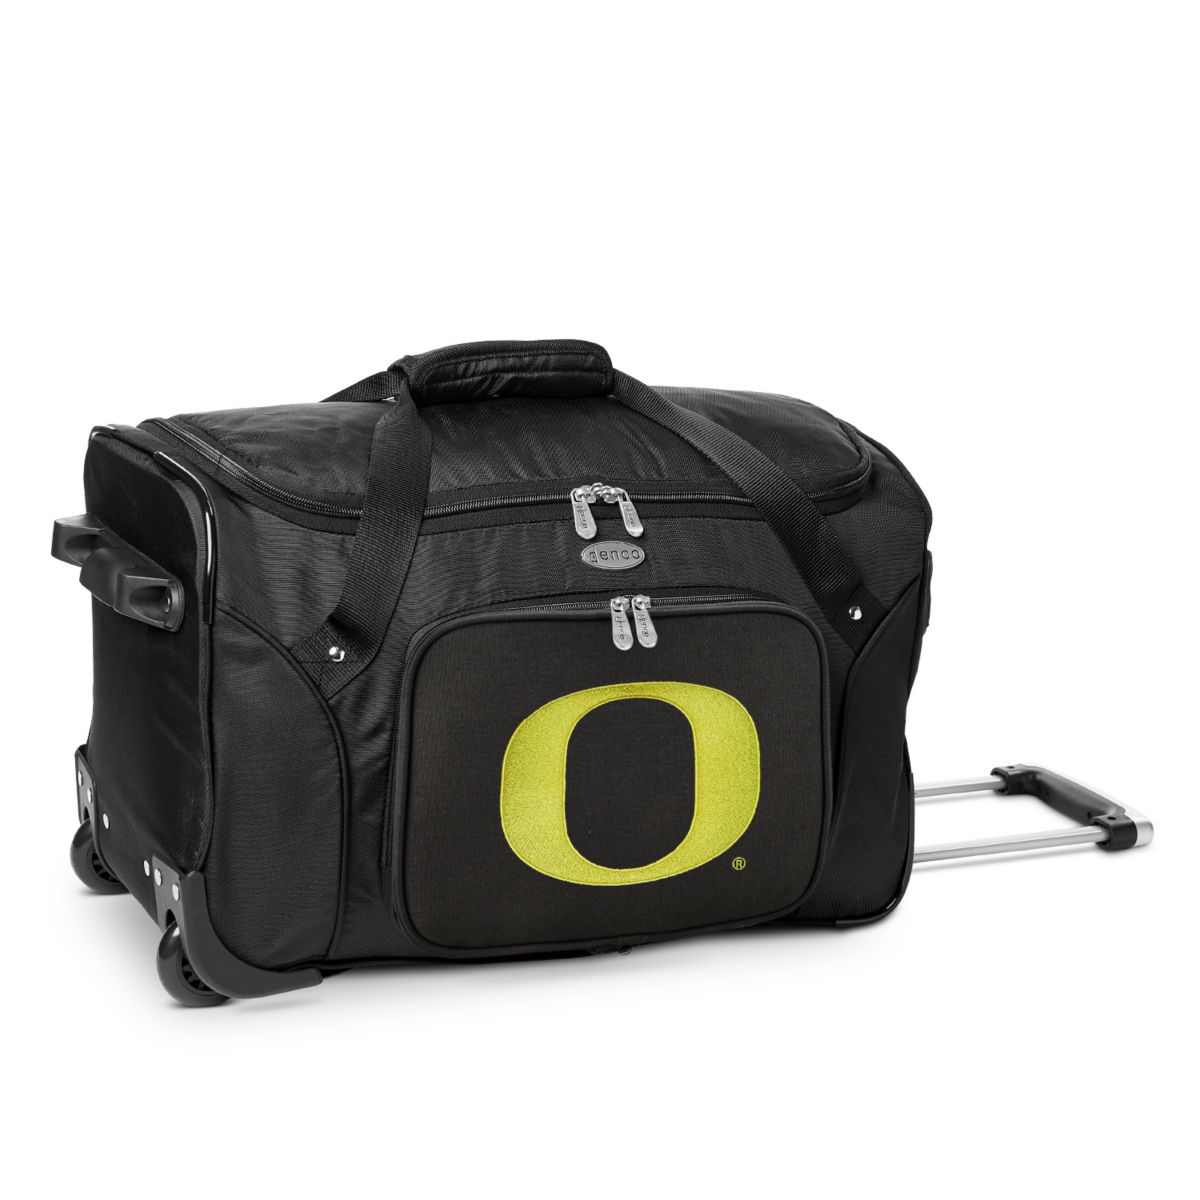 Спортивная сумка Denco Oregon Ducks на колесиках диаметром 22 дюйма Denco